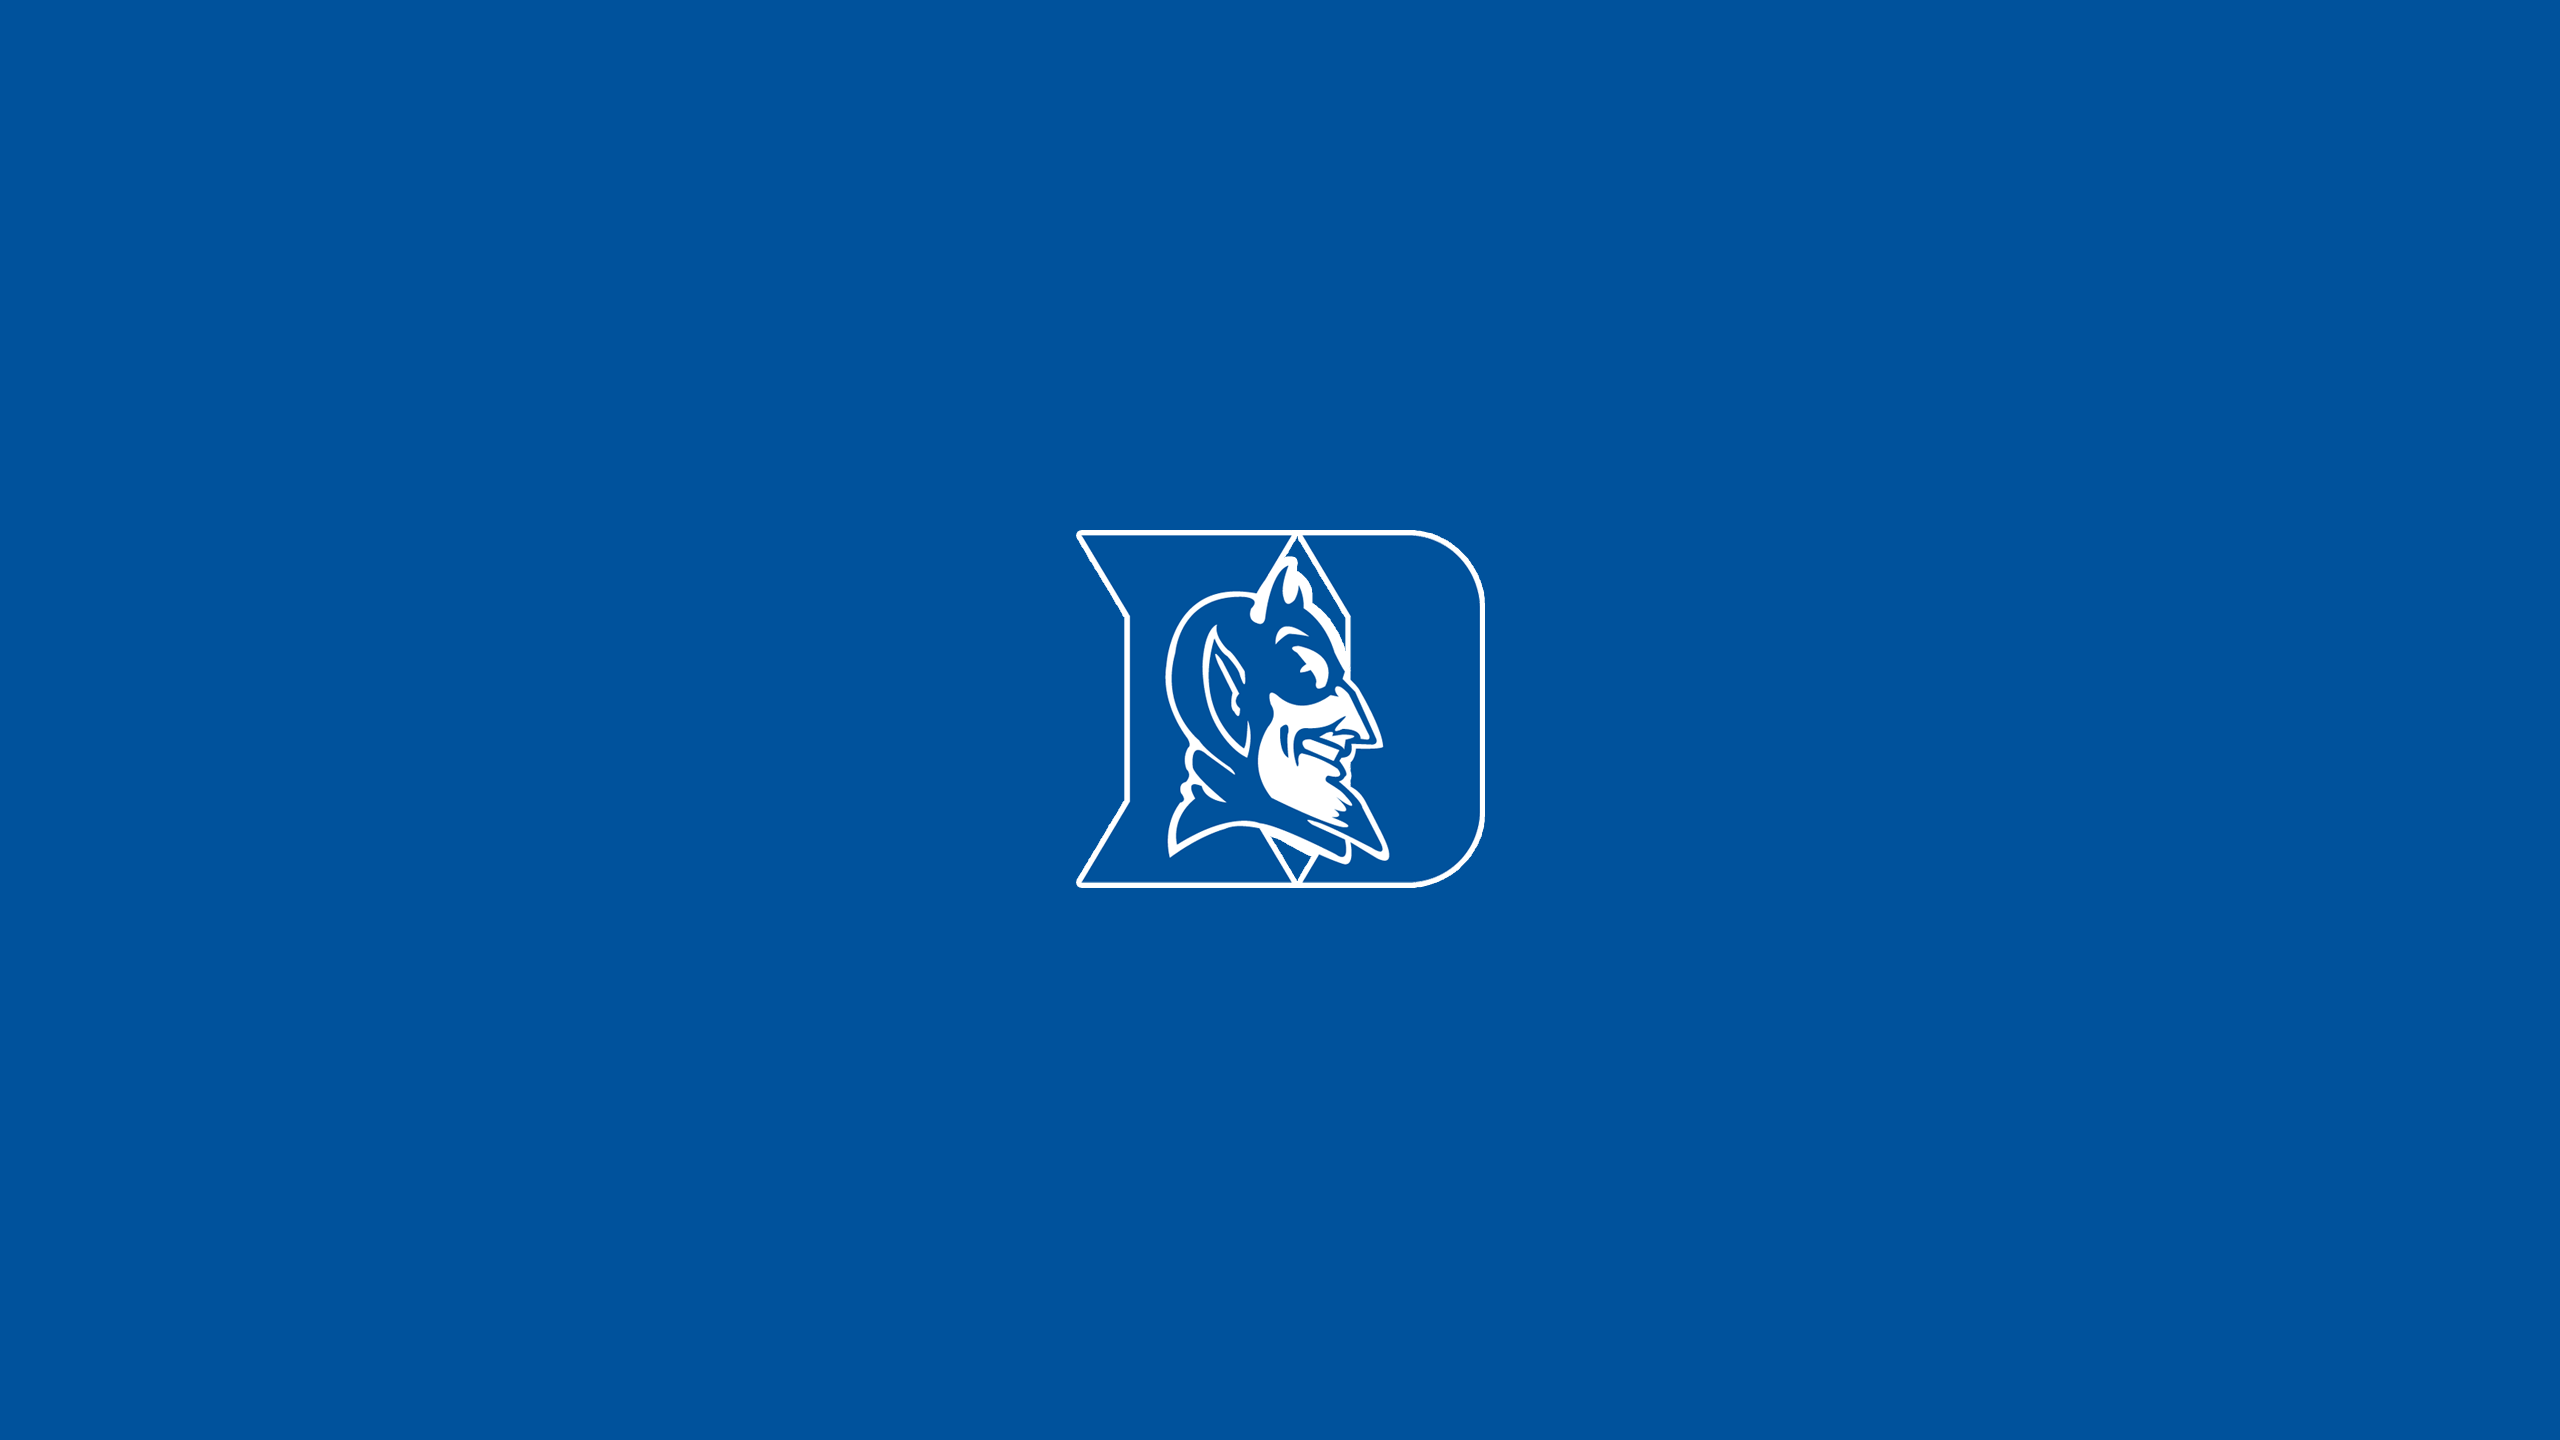 Duke Blue Devils - NCAAF - Square Bettor